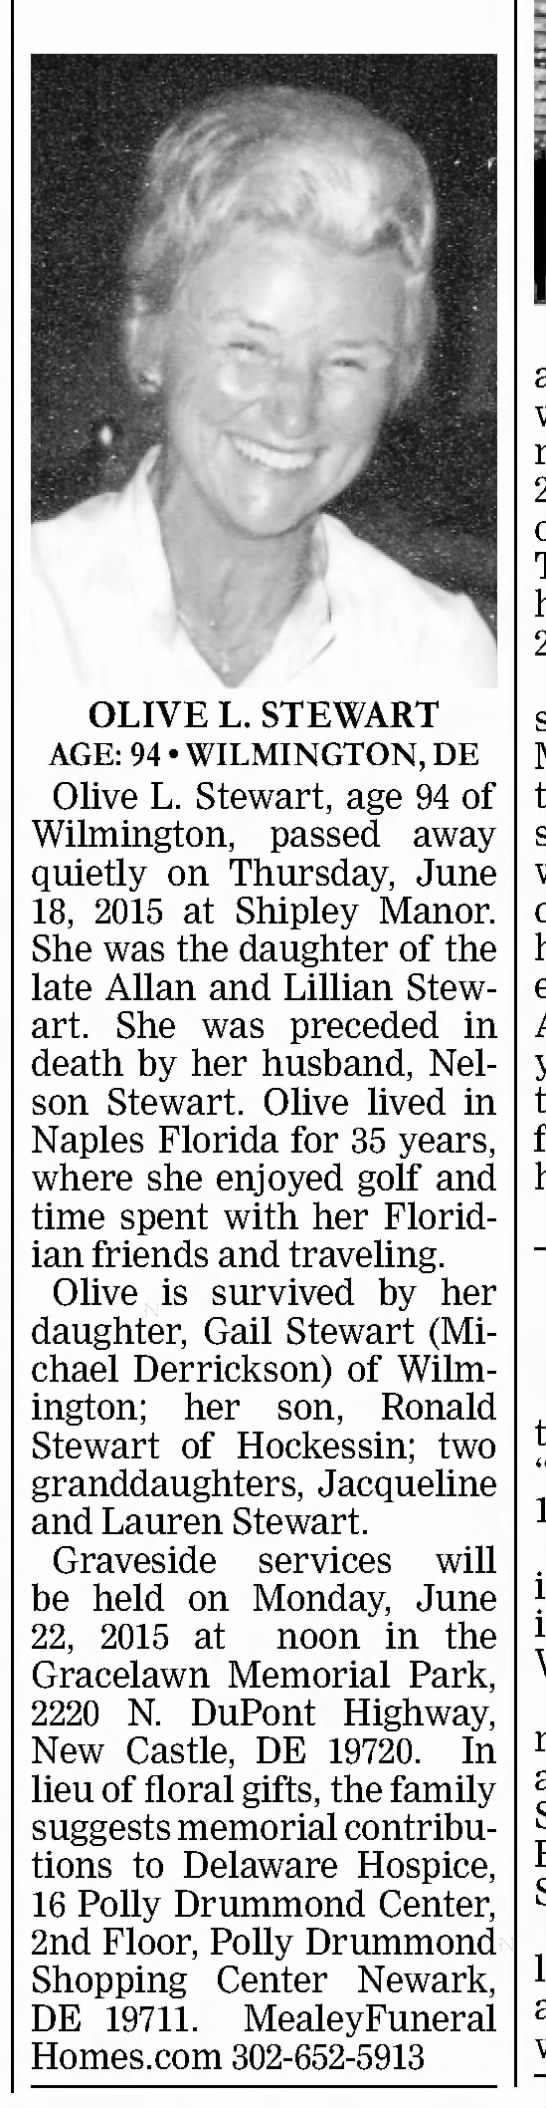 Olive Stewart obituary - 